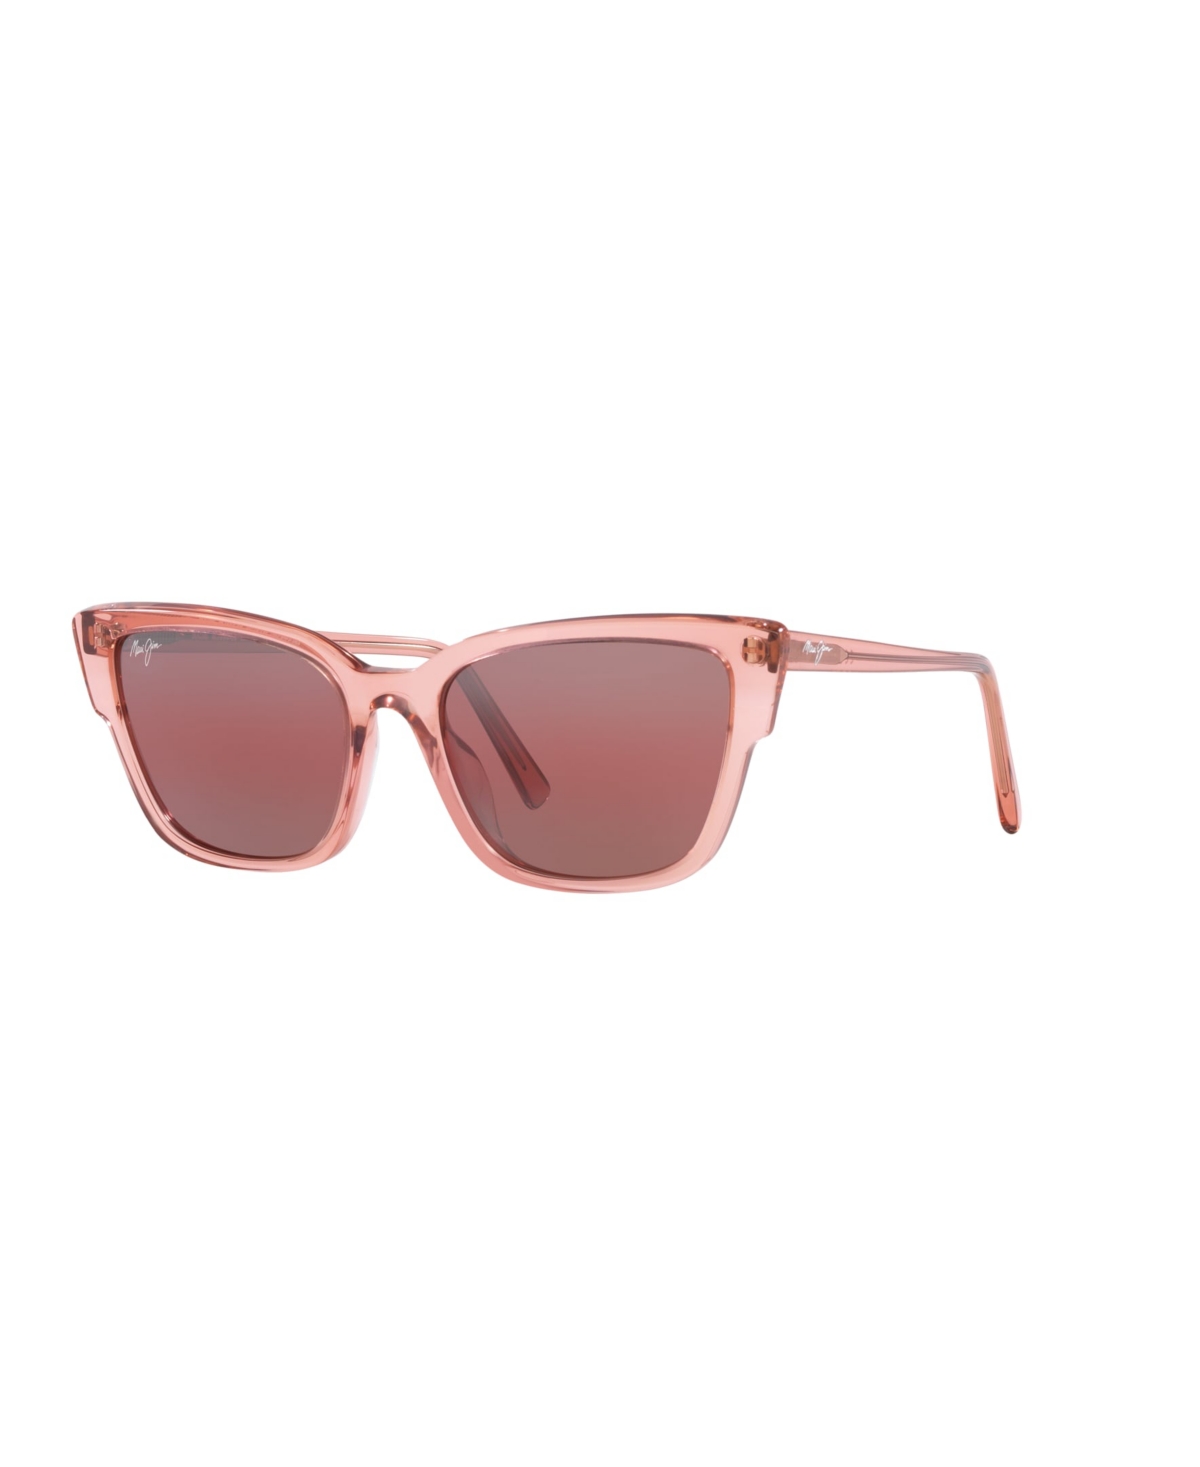 Maui Jim Women's Polarized Sunglasses, Kou In Pink Shiny